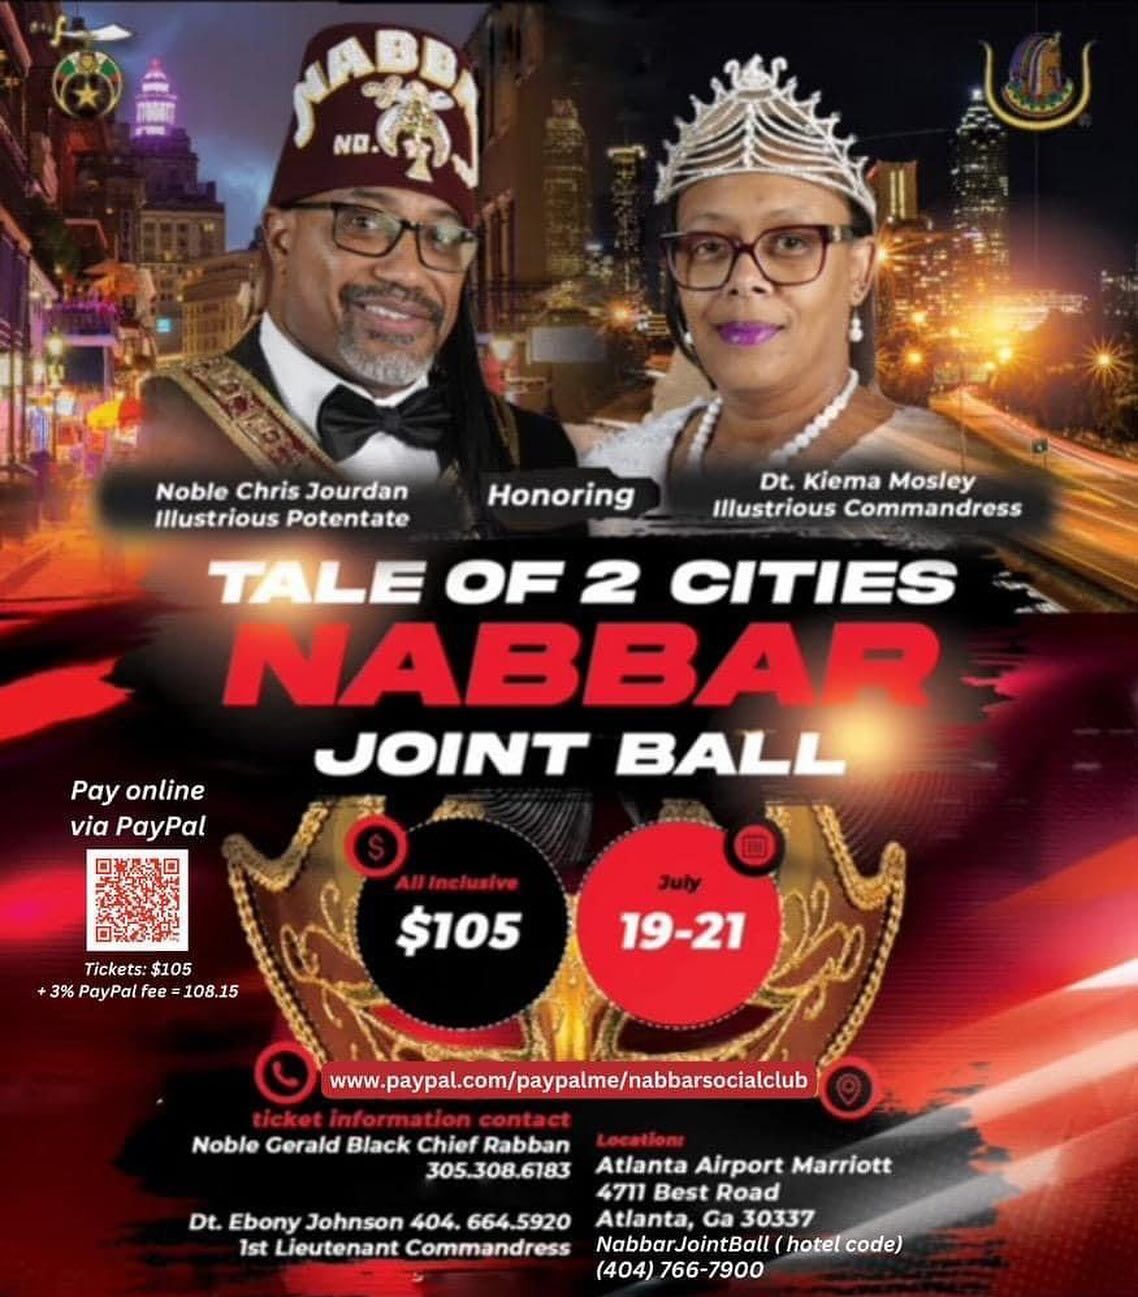 Nabbar Joint Ball - Tale of 2 Cities!!